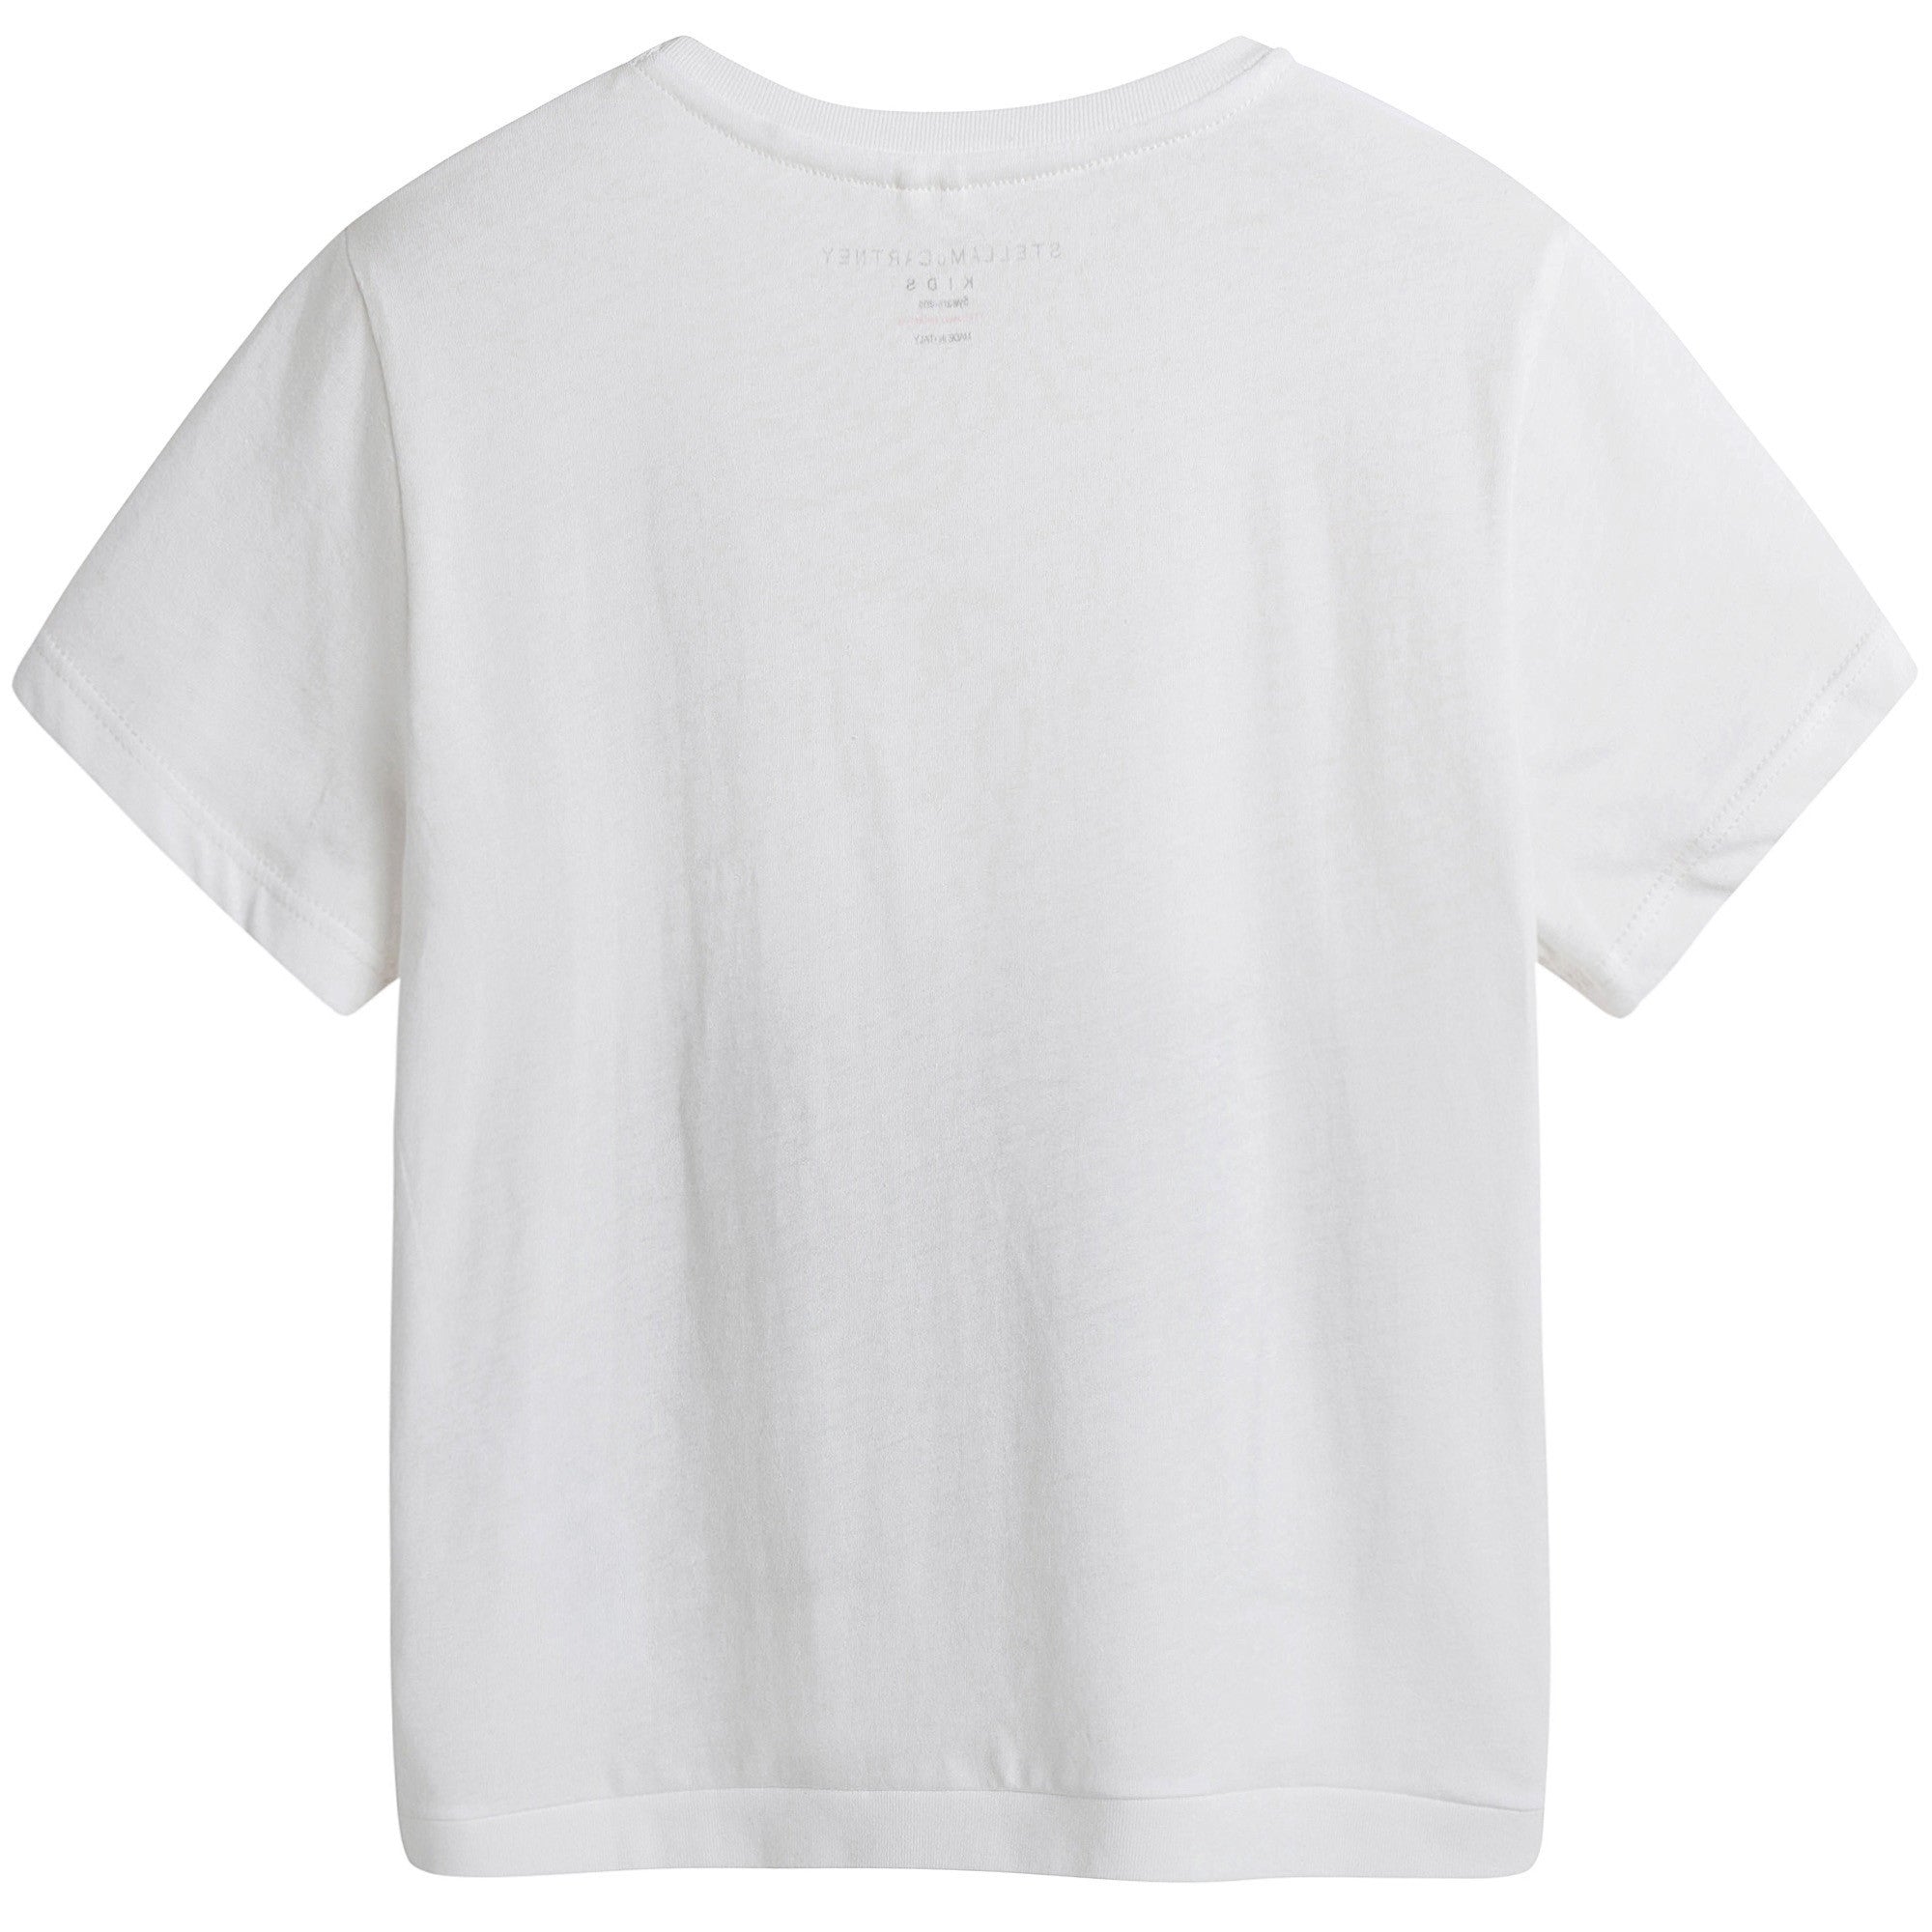 Girls White & Black Piano Print Plum T-shirt - CÉMAROSE | Children's Fashion Store - 3